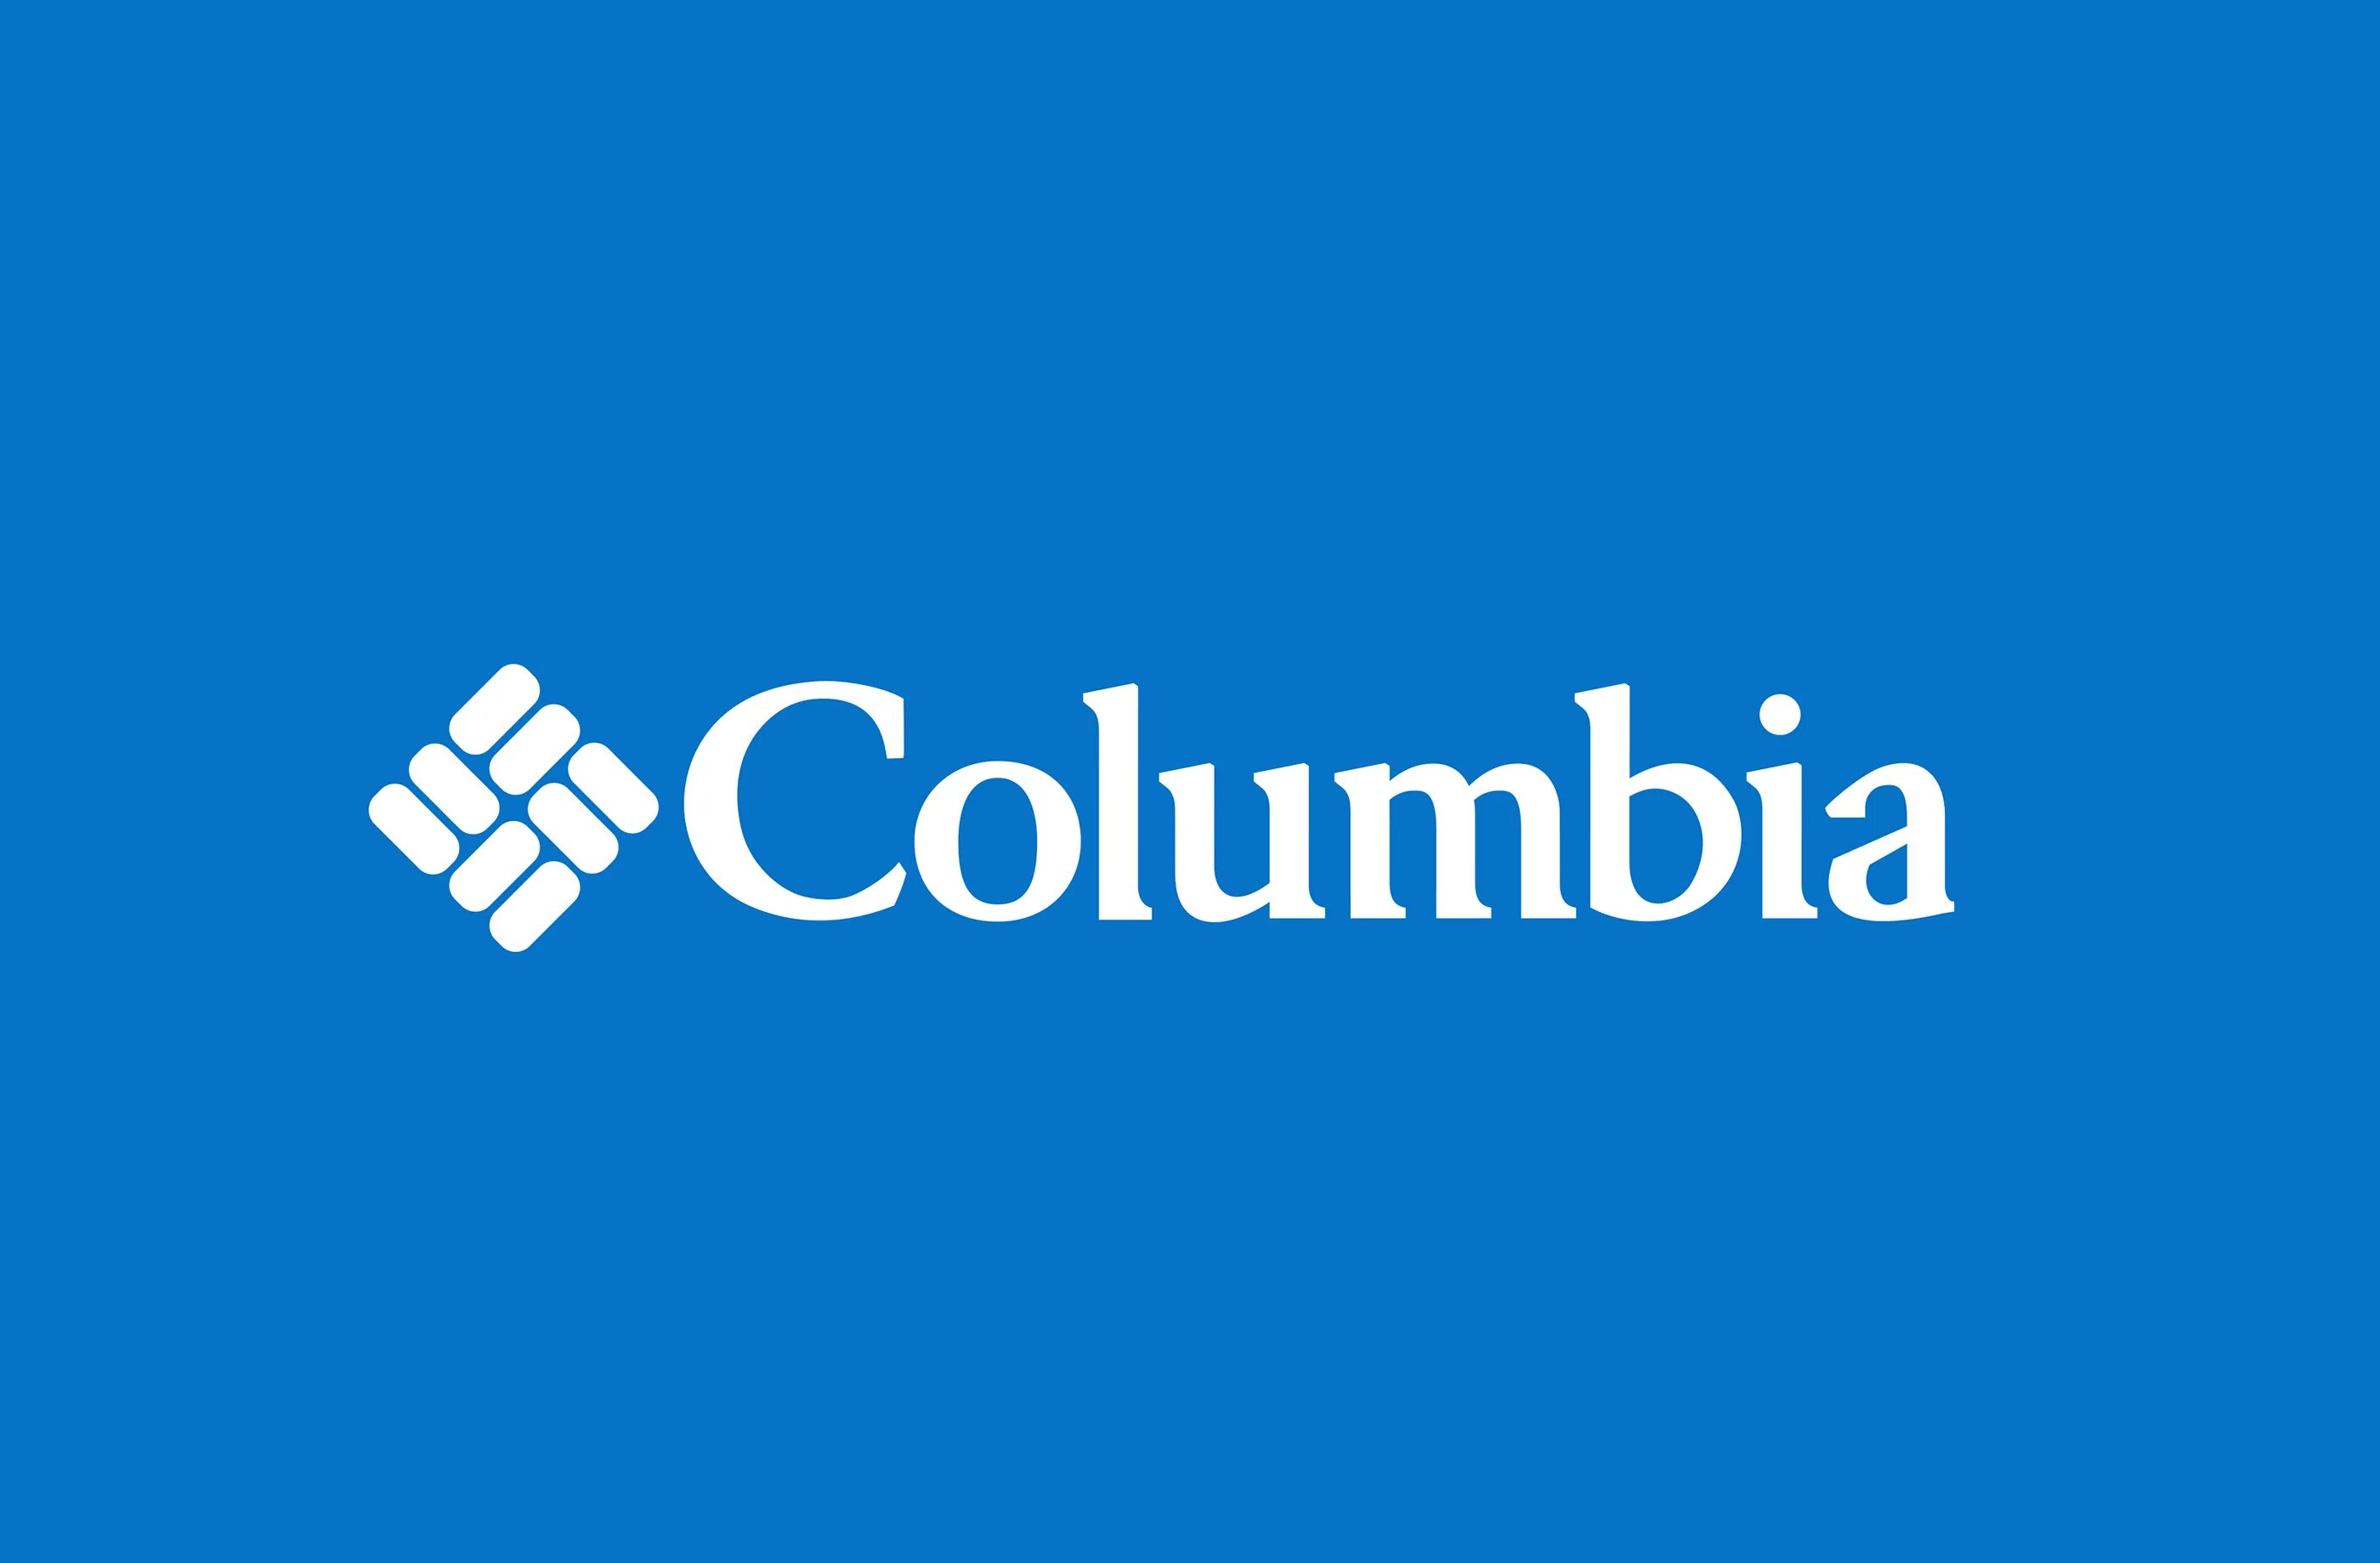 Columbia Sportswear Company лого. Логотип коламбия одежда. Надпись Columbia. Фирменный знак Columbia. Columbia company